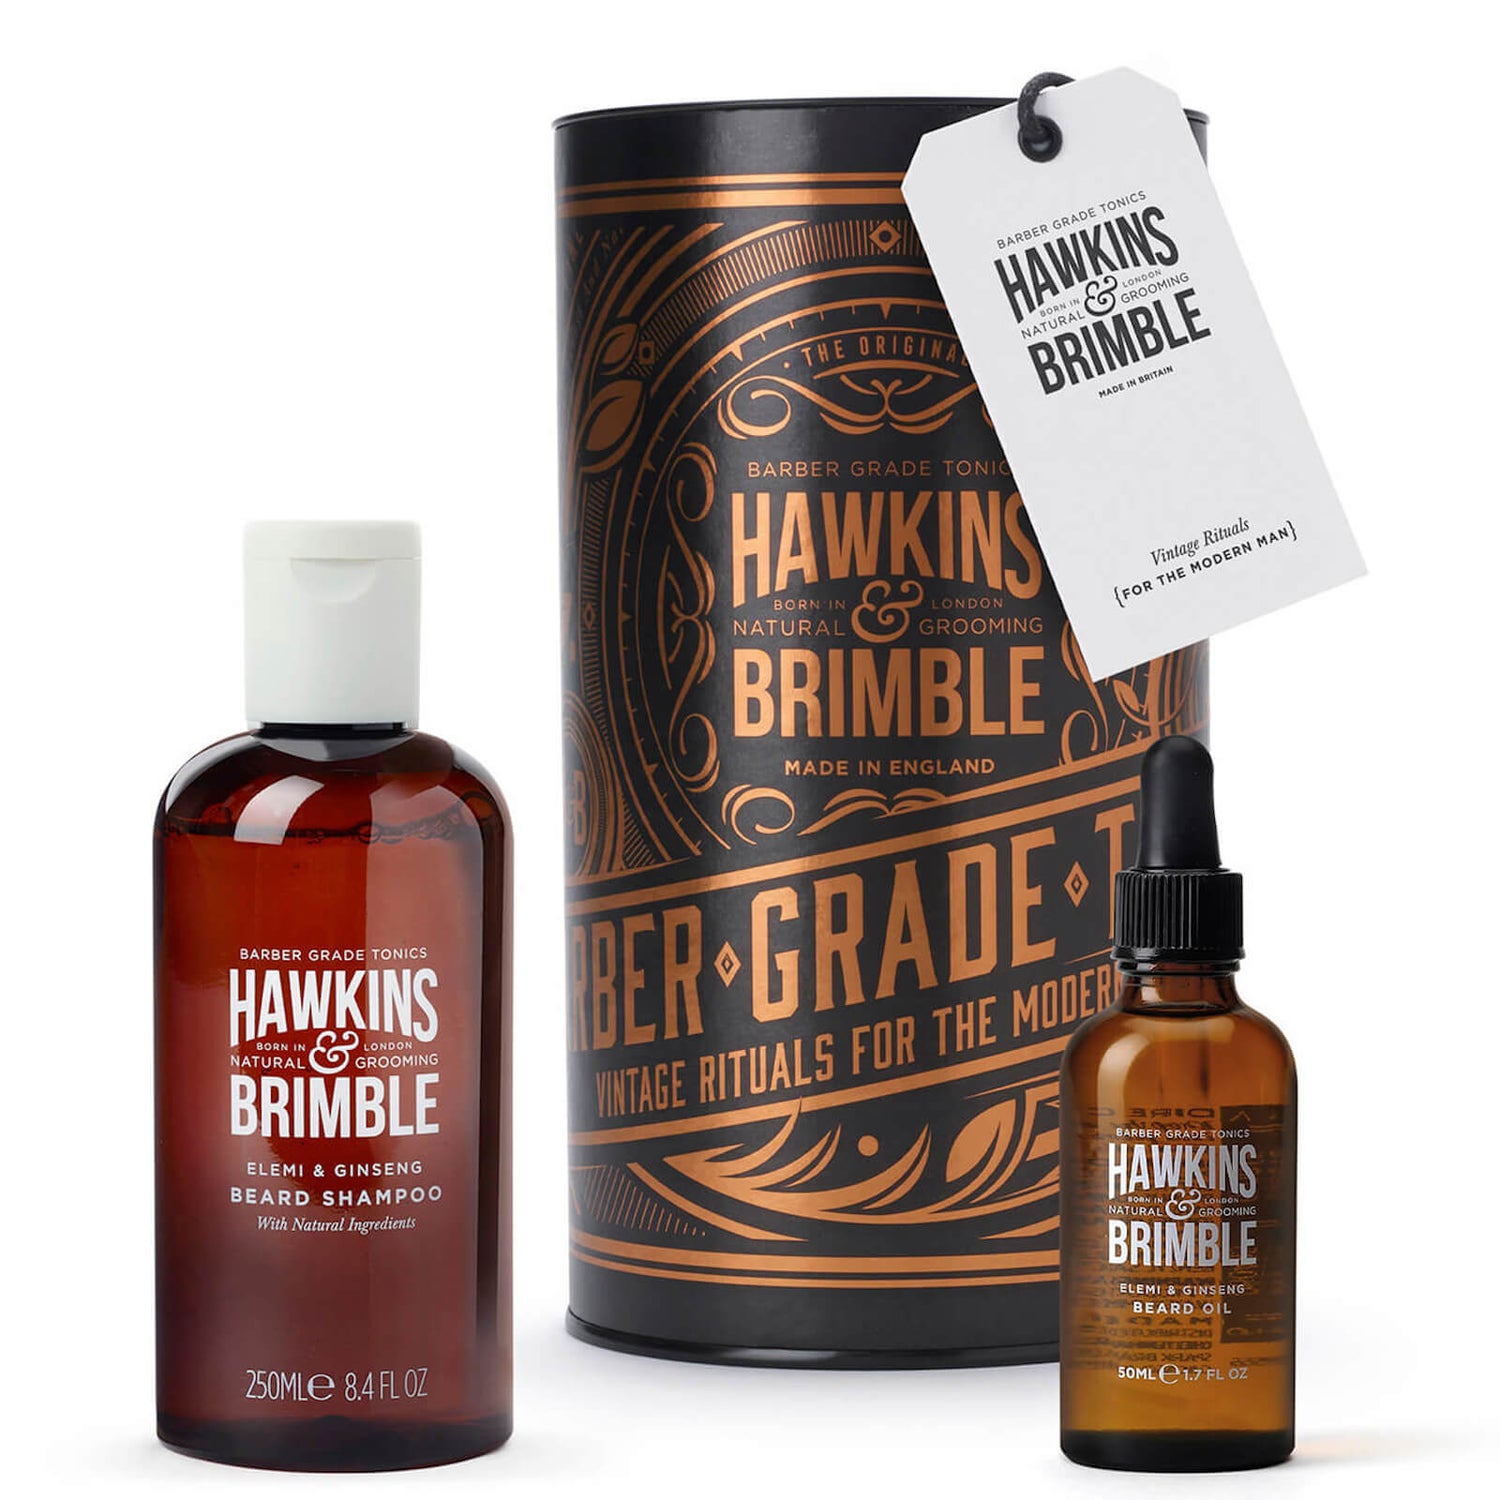 Hawkins & Brimble Beard Set Regalo